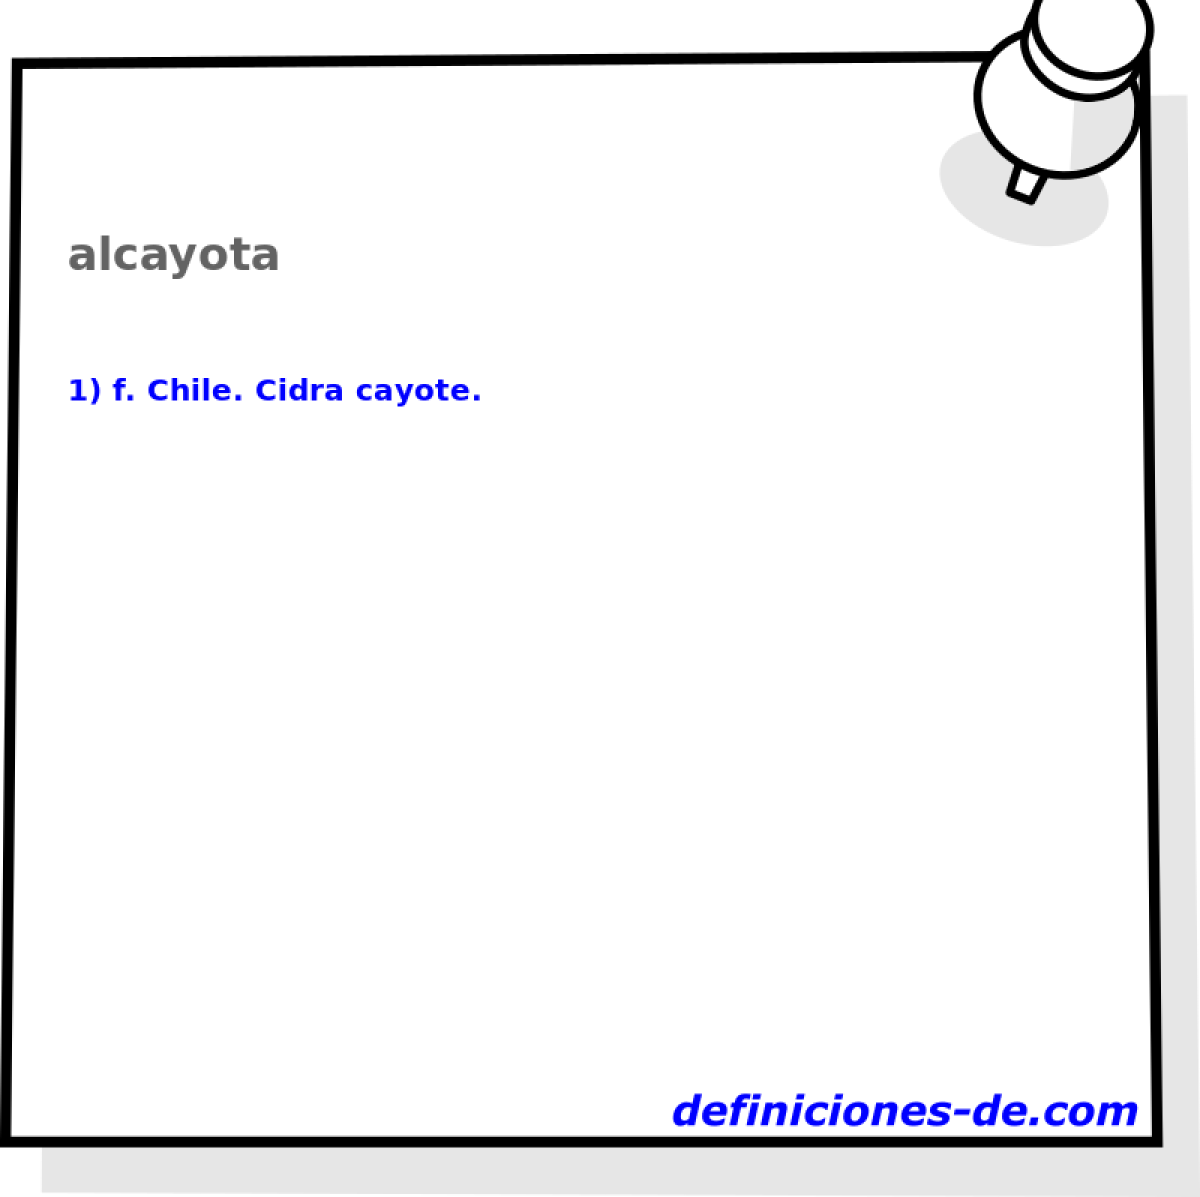 alcayota 